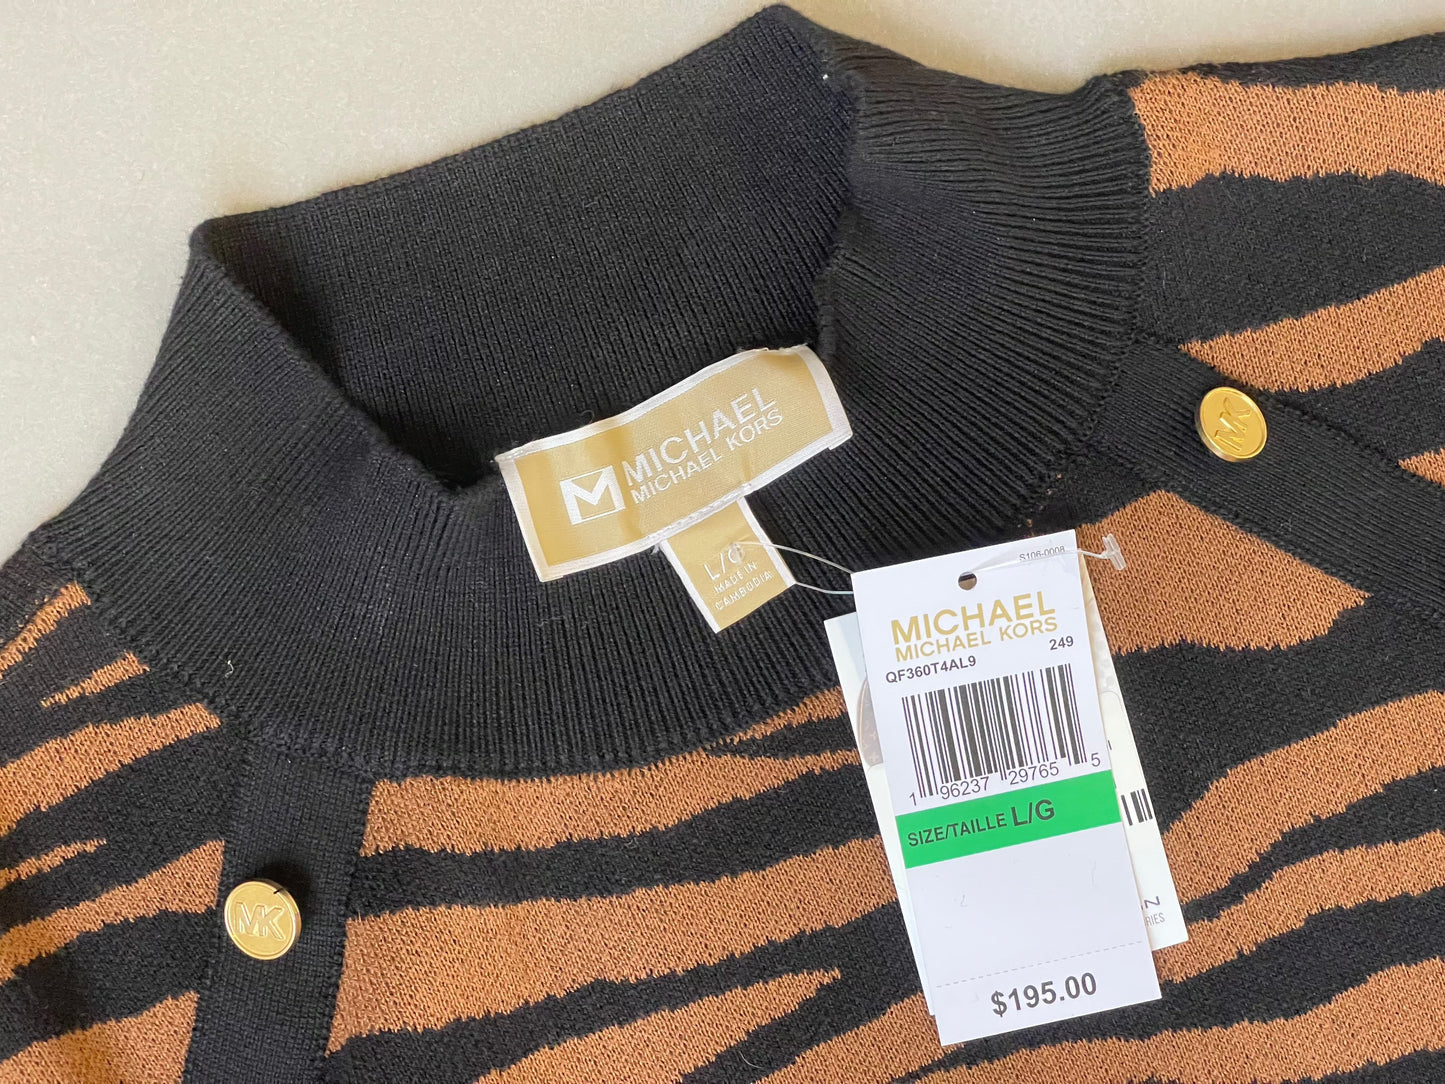 Michael kors Brown Zebra Print Long Sleeve Knit Top Size LG